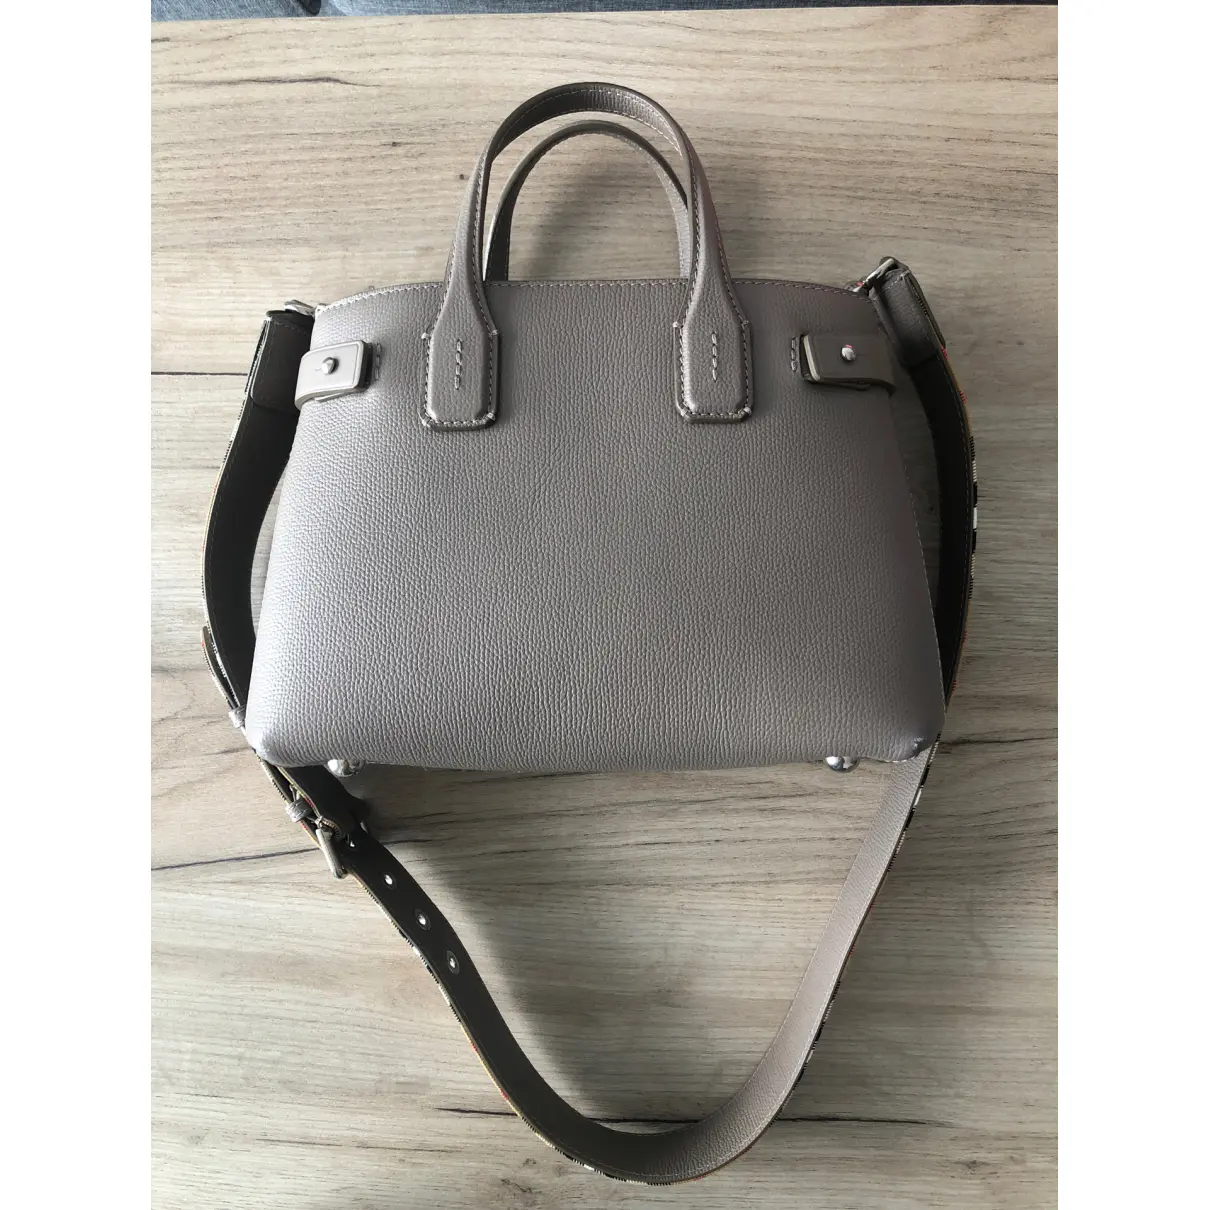 Buy Burberry The Banner leather handbag online